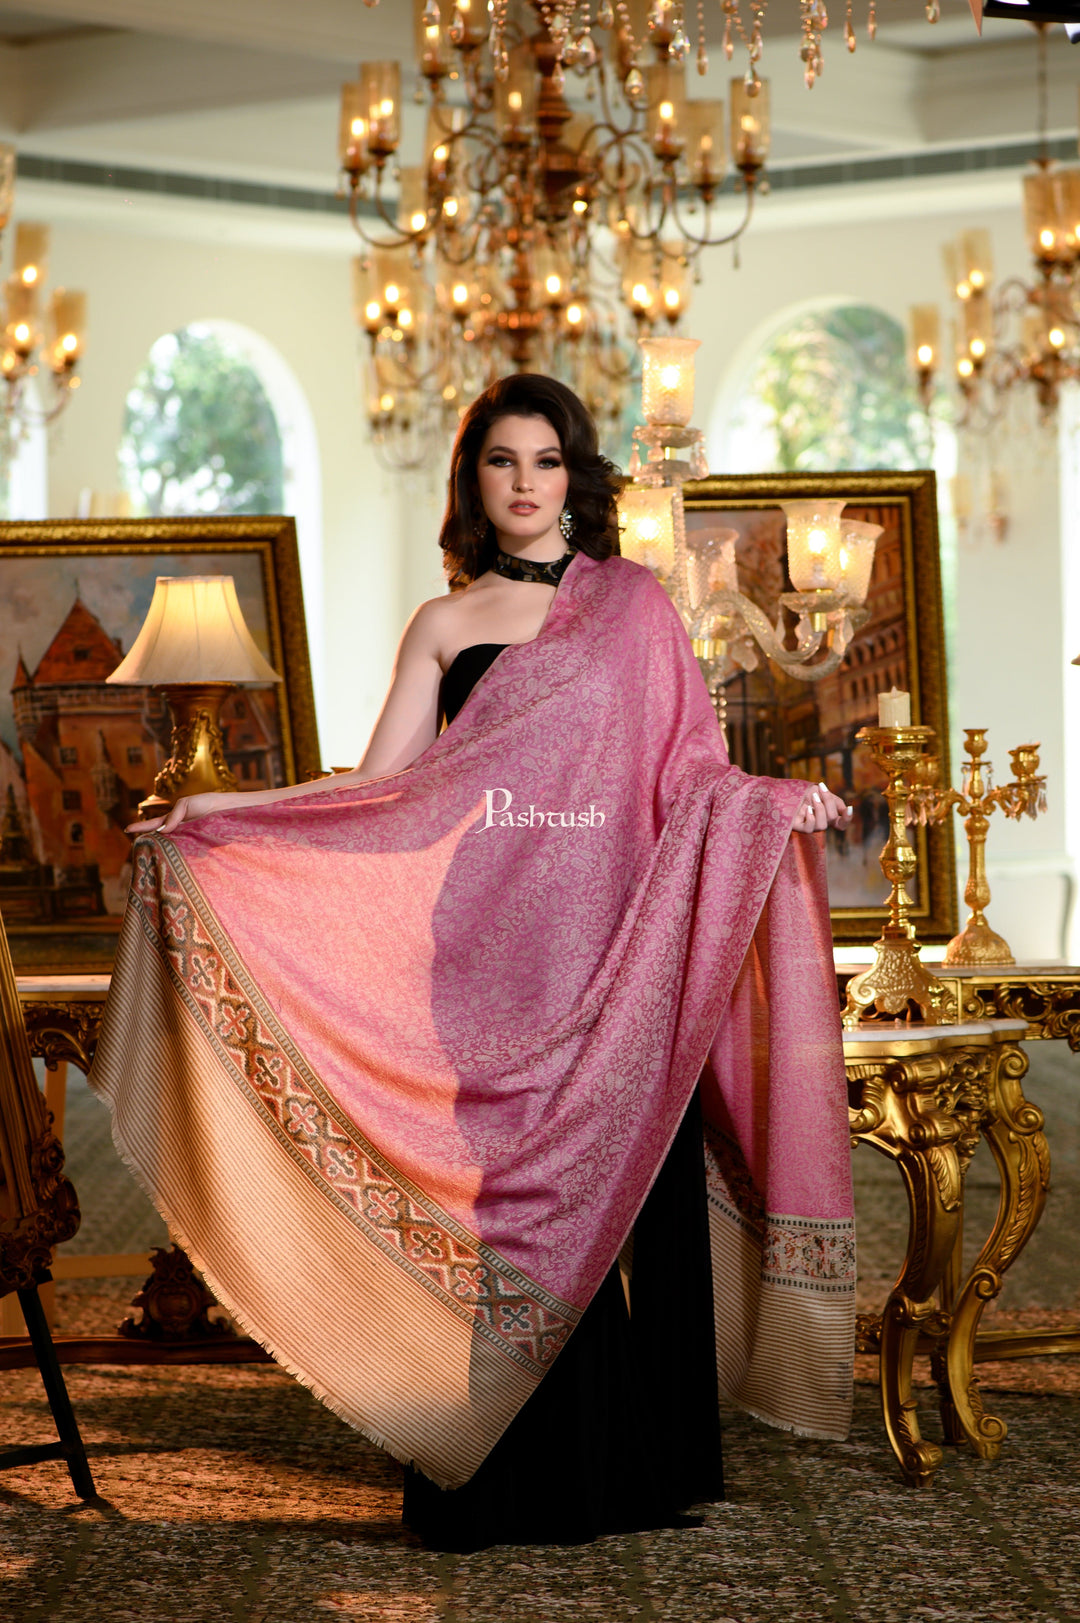 Pashtush India Womens Shawls Pashtush Womens Shawl, Extra Fine Wool, Soft and Warm, Light Weight, Majenta